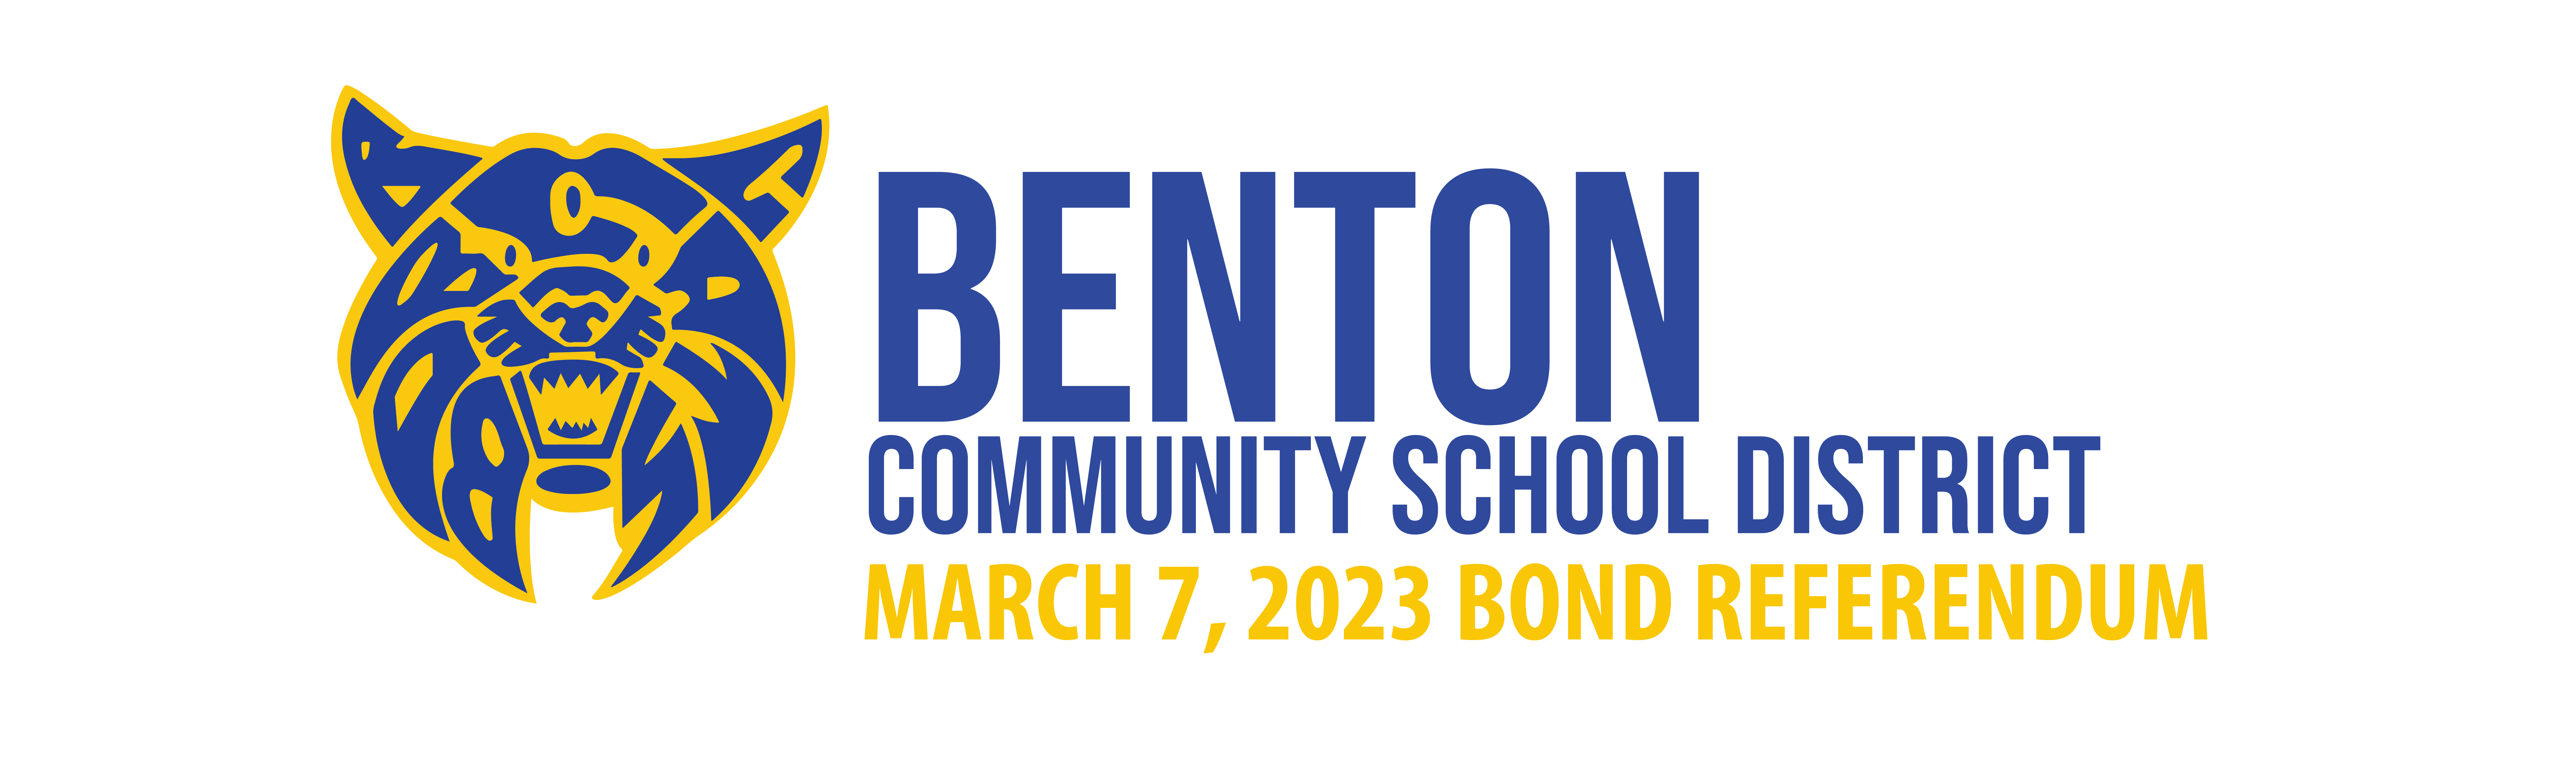 Benton-CSD-March-7-2023-Bond-Referendum